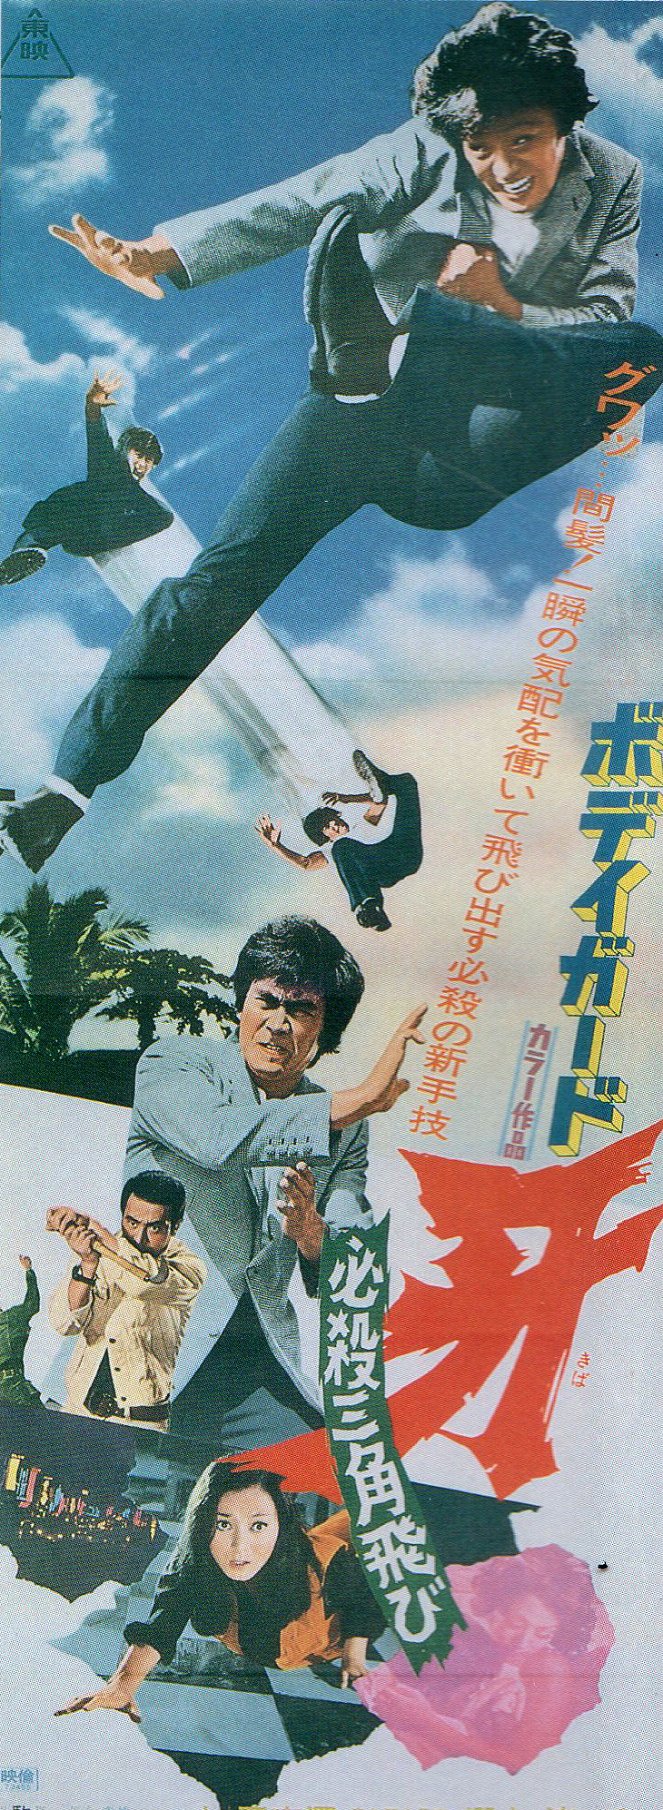 Bodyguard Kiba: Hissacu sankaku tobi - Posters